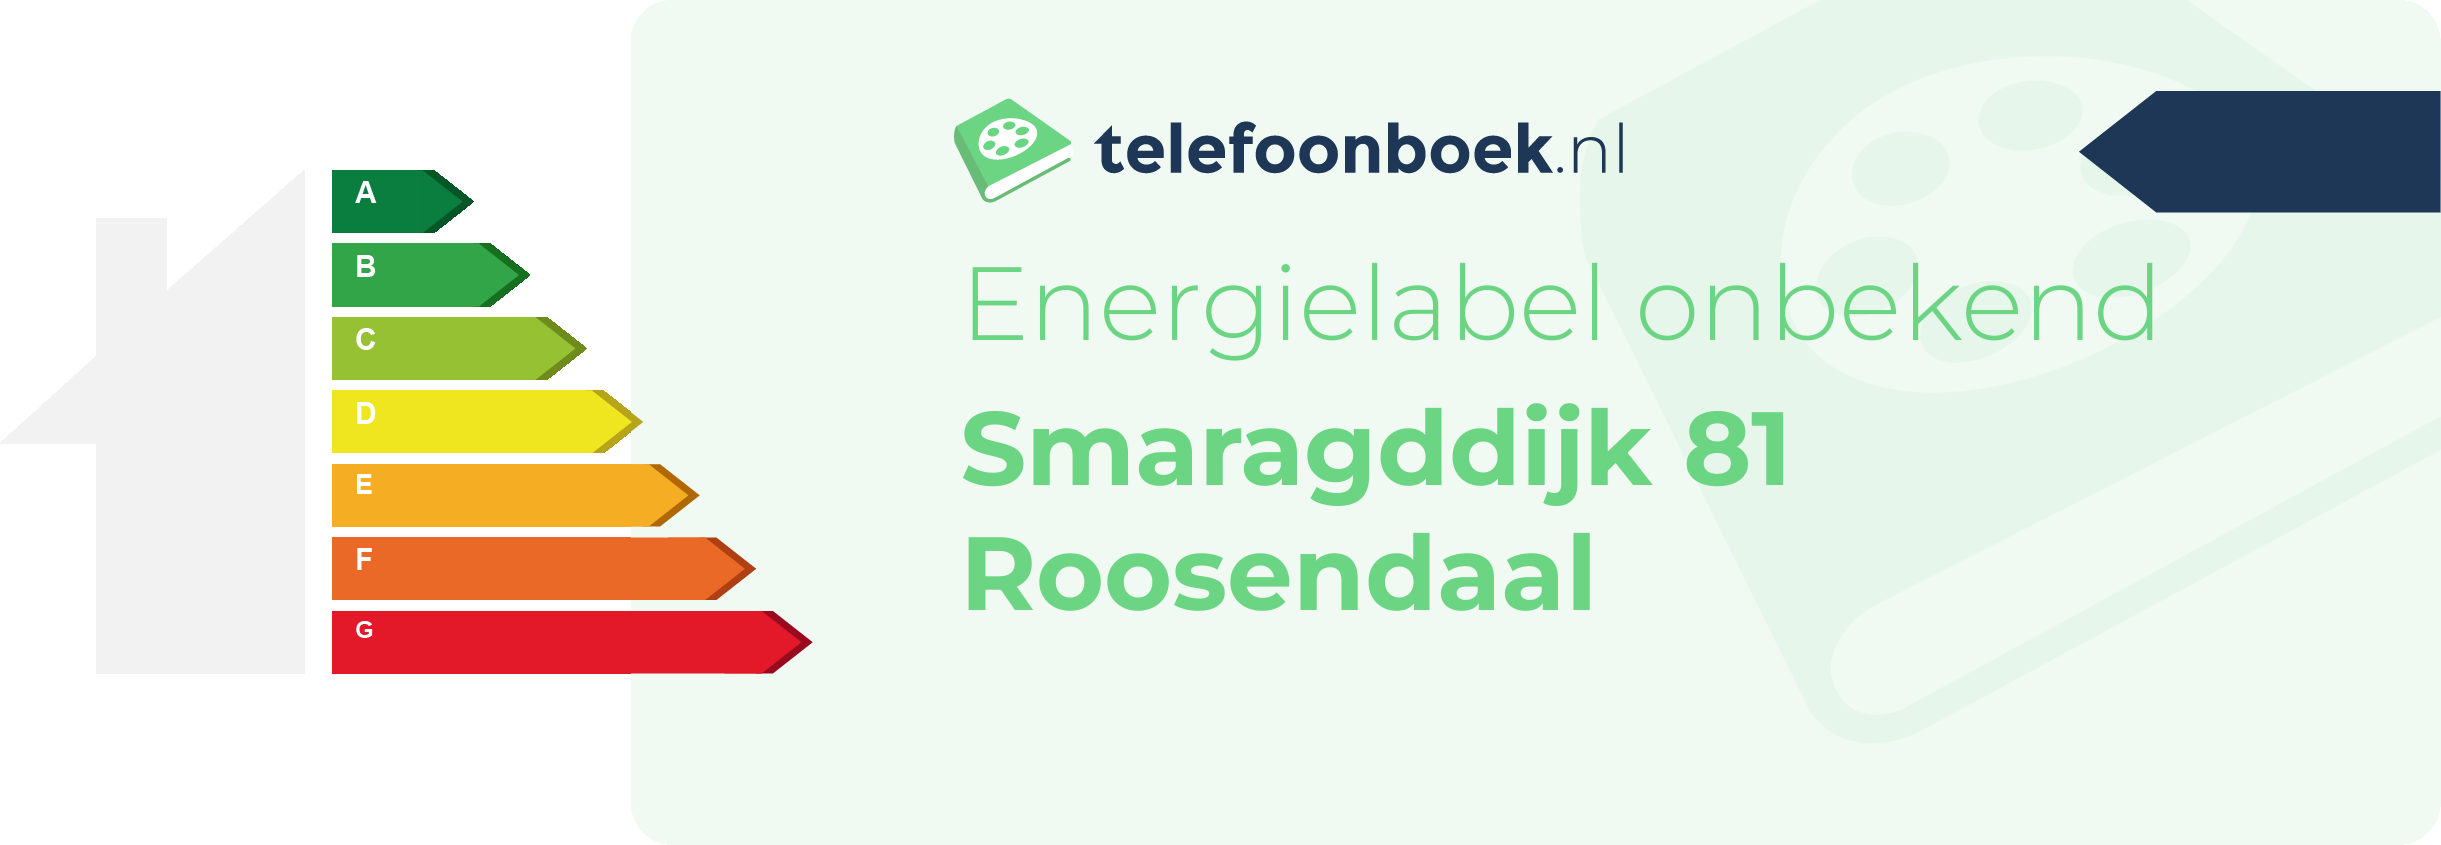 Energielabel Smaragddijk 81 Roosendaal